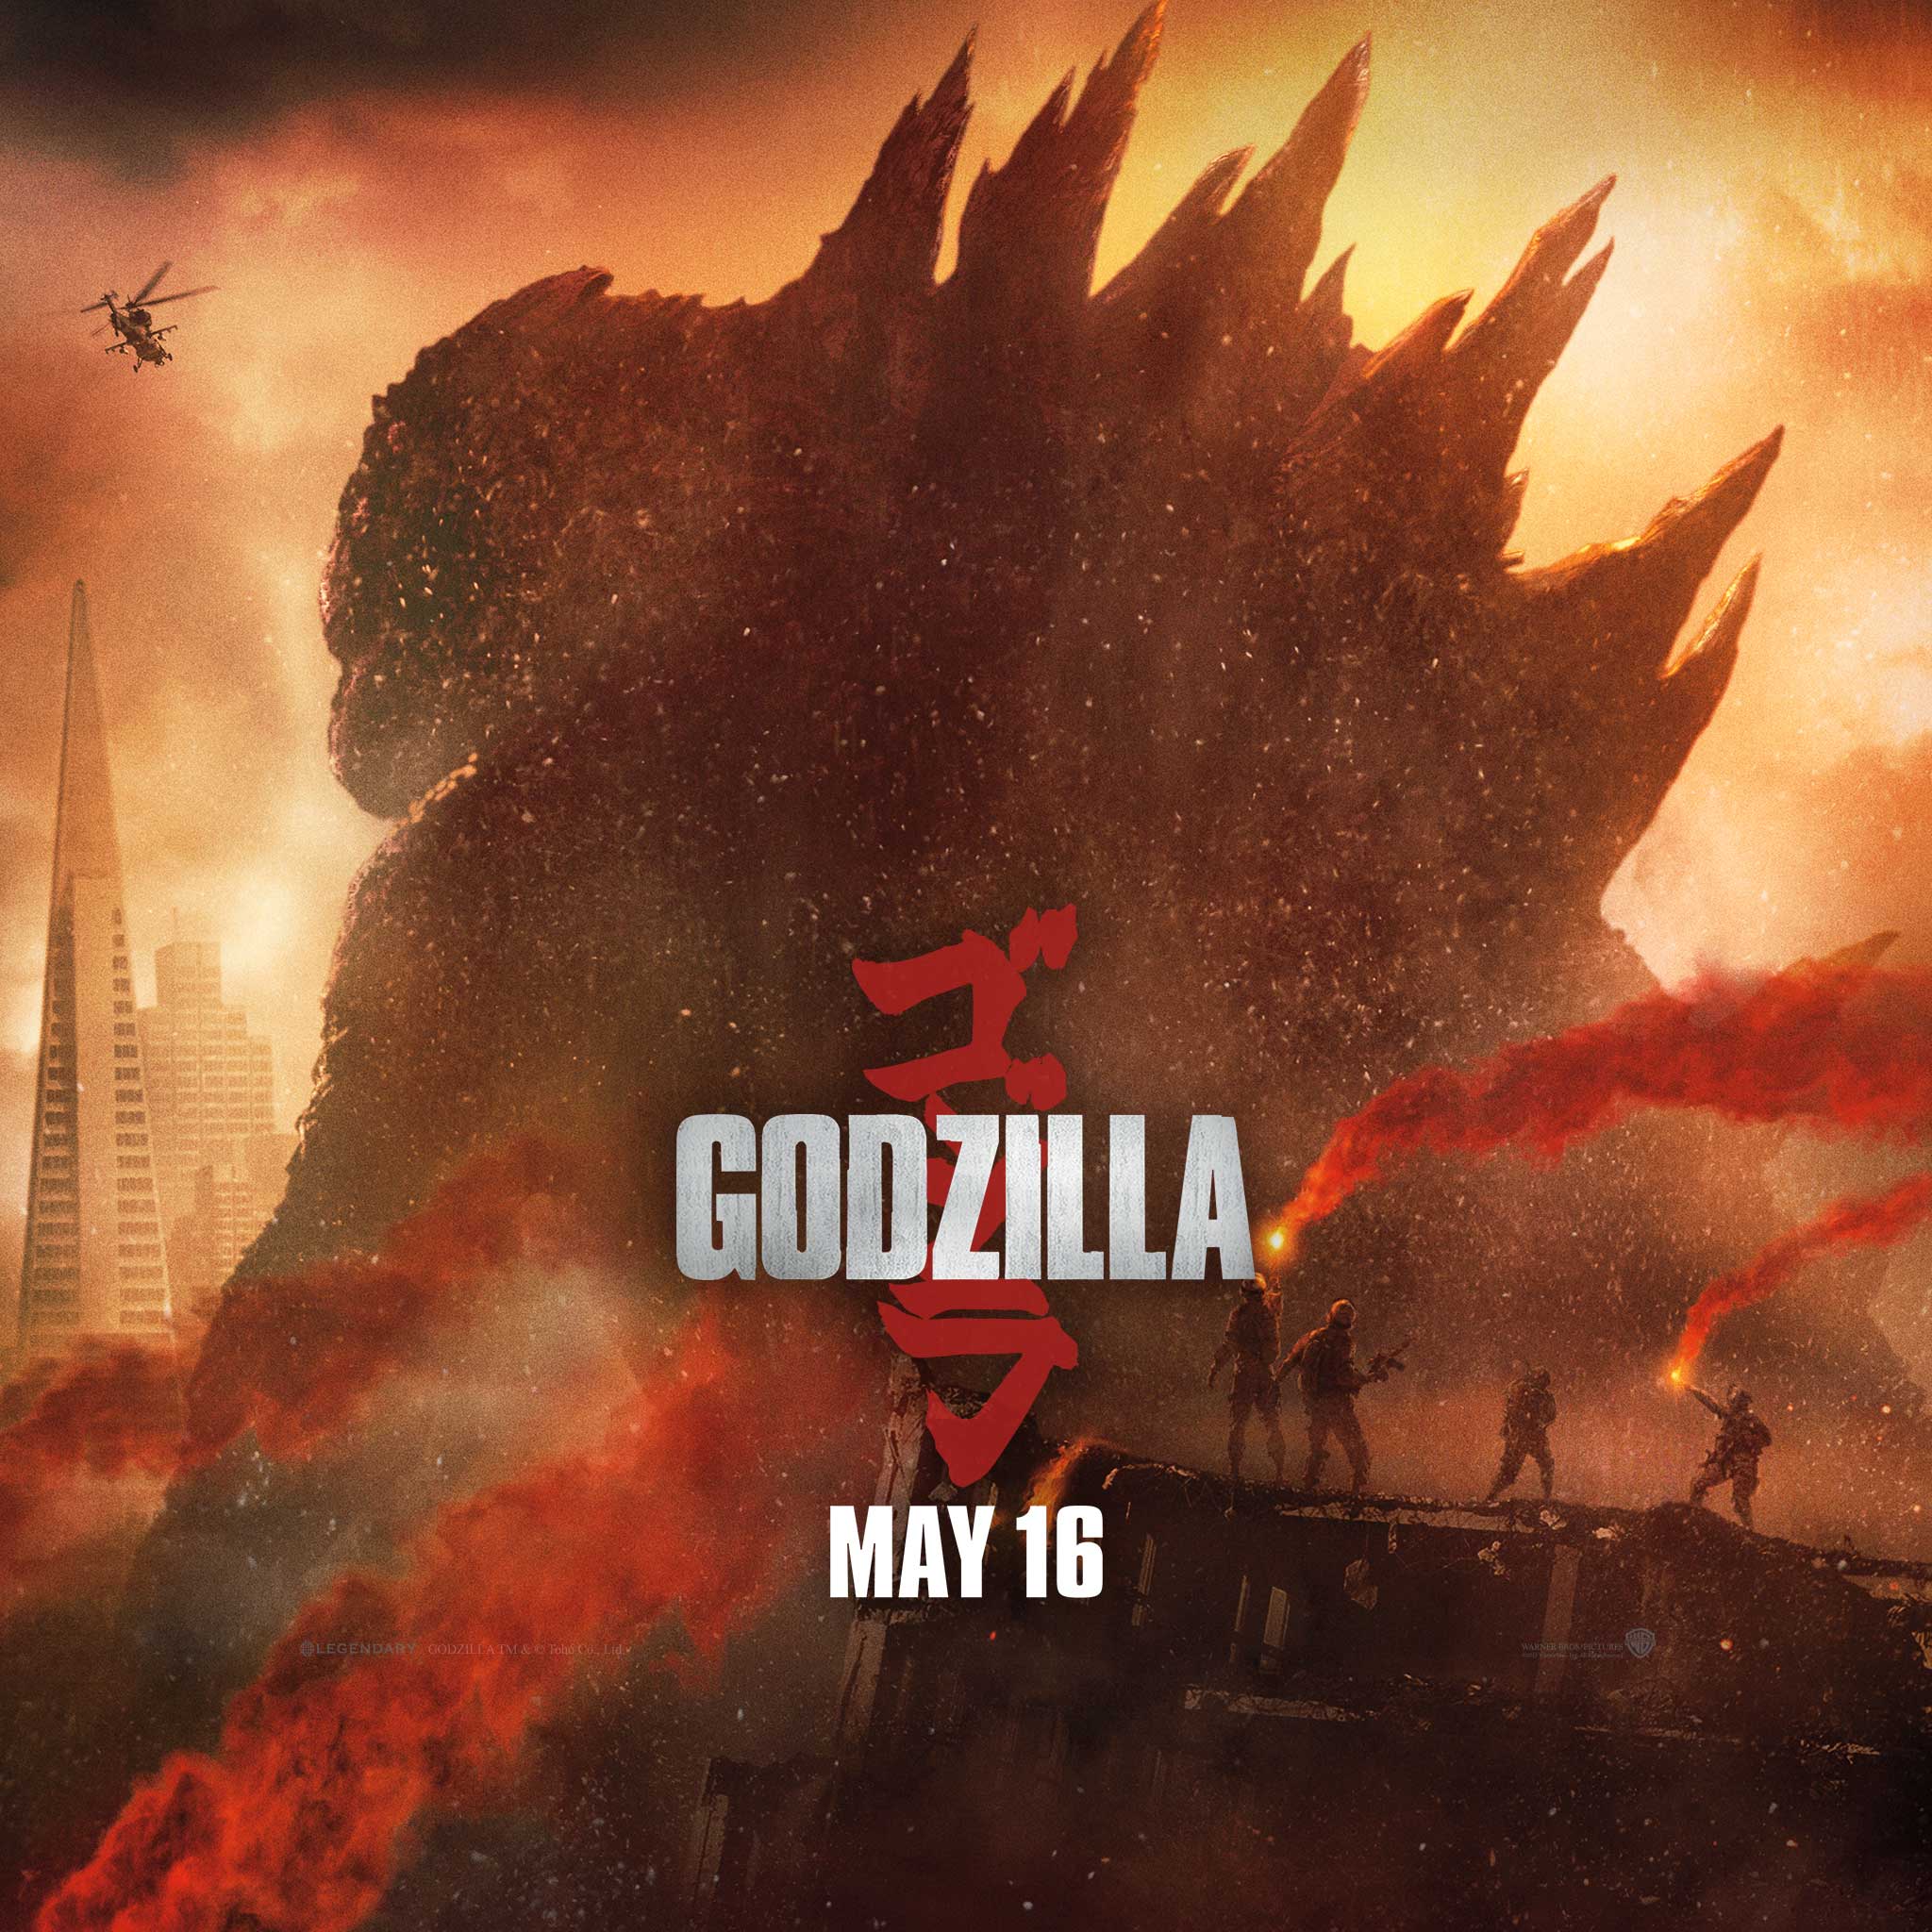 Godzilla Movie 14 Hd Iphone Ipad Wallpapers